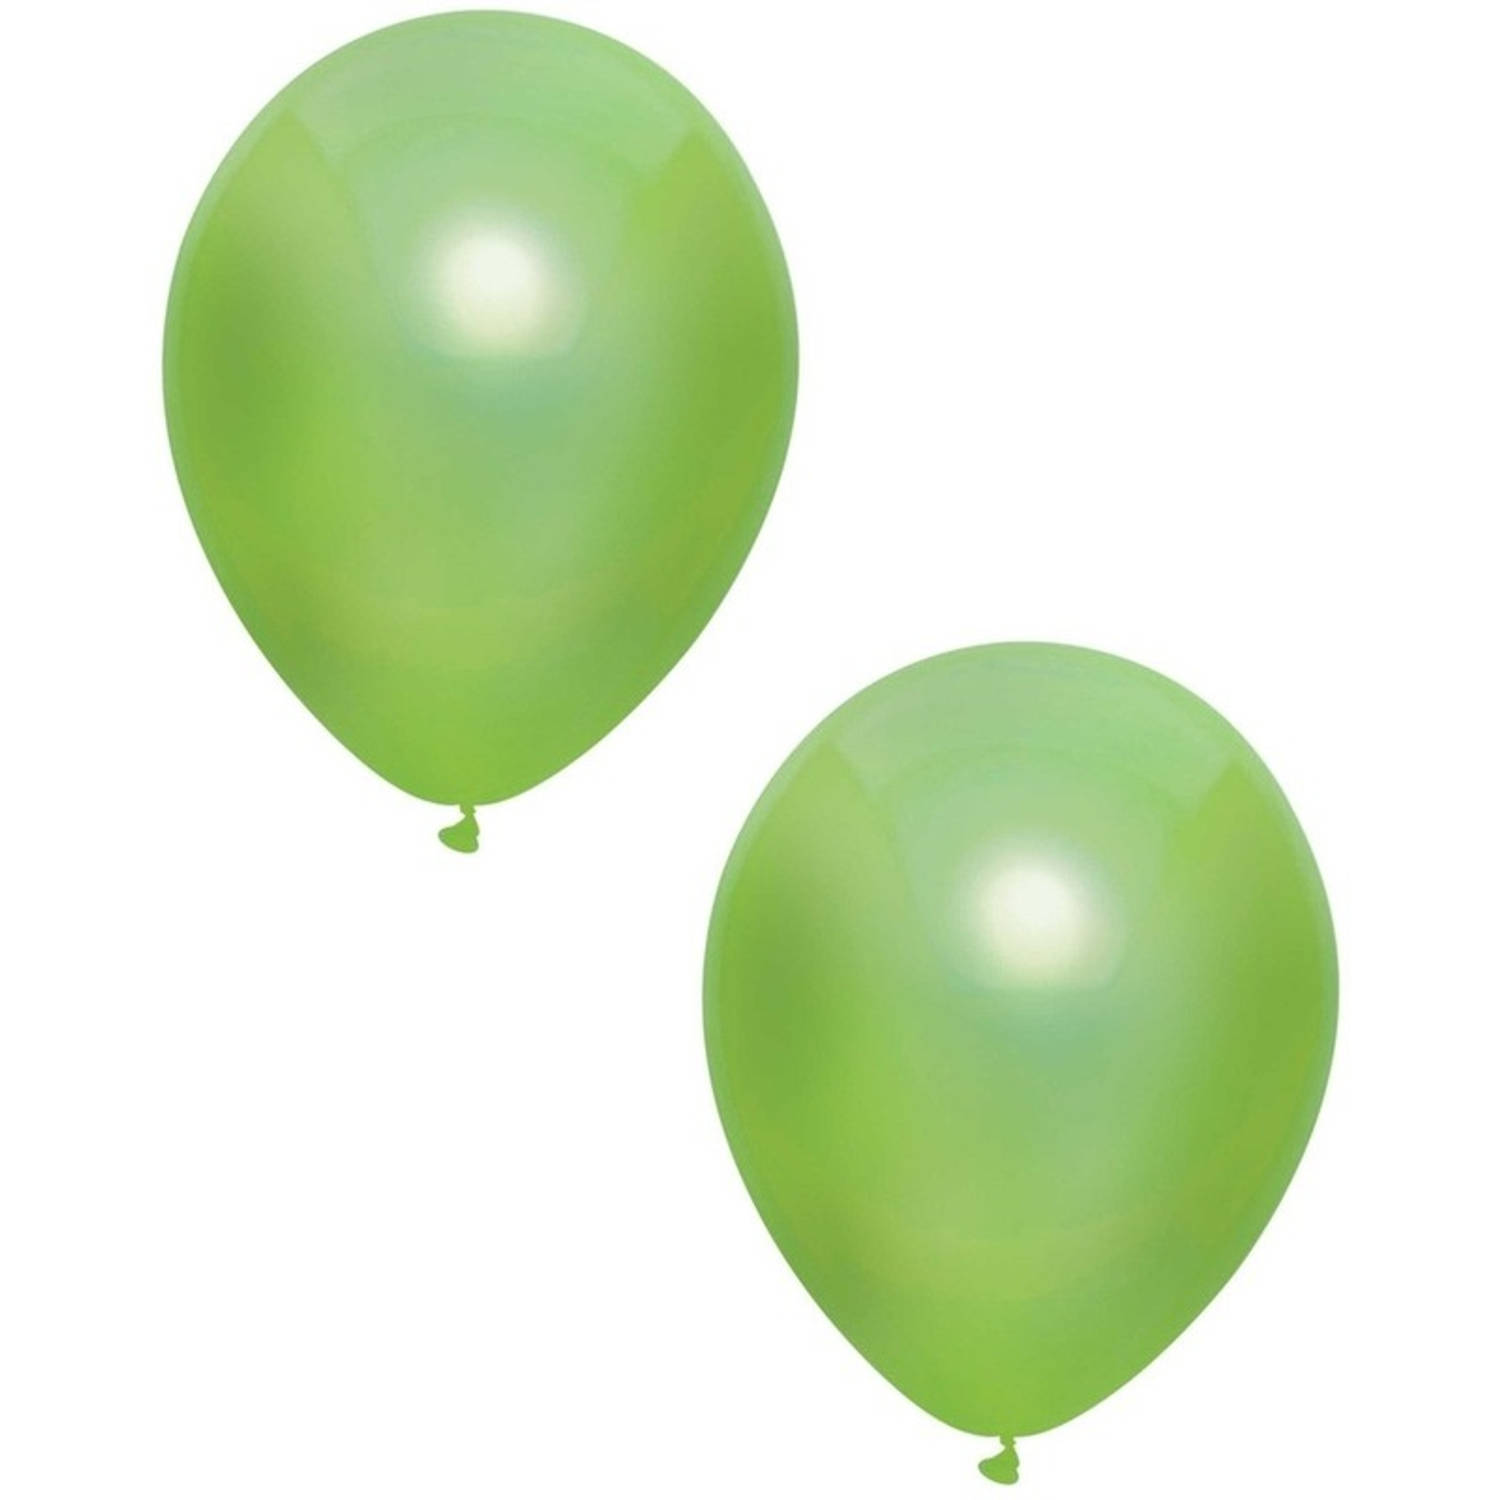 10x Lichtgroene metallic ballonnen 30 cm - Verjaardag thema feestartikelen/versiering - Ballonnen